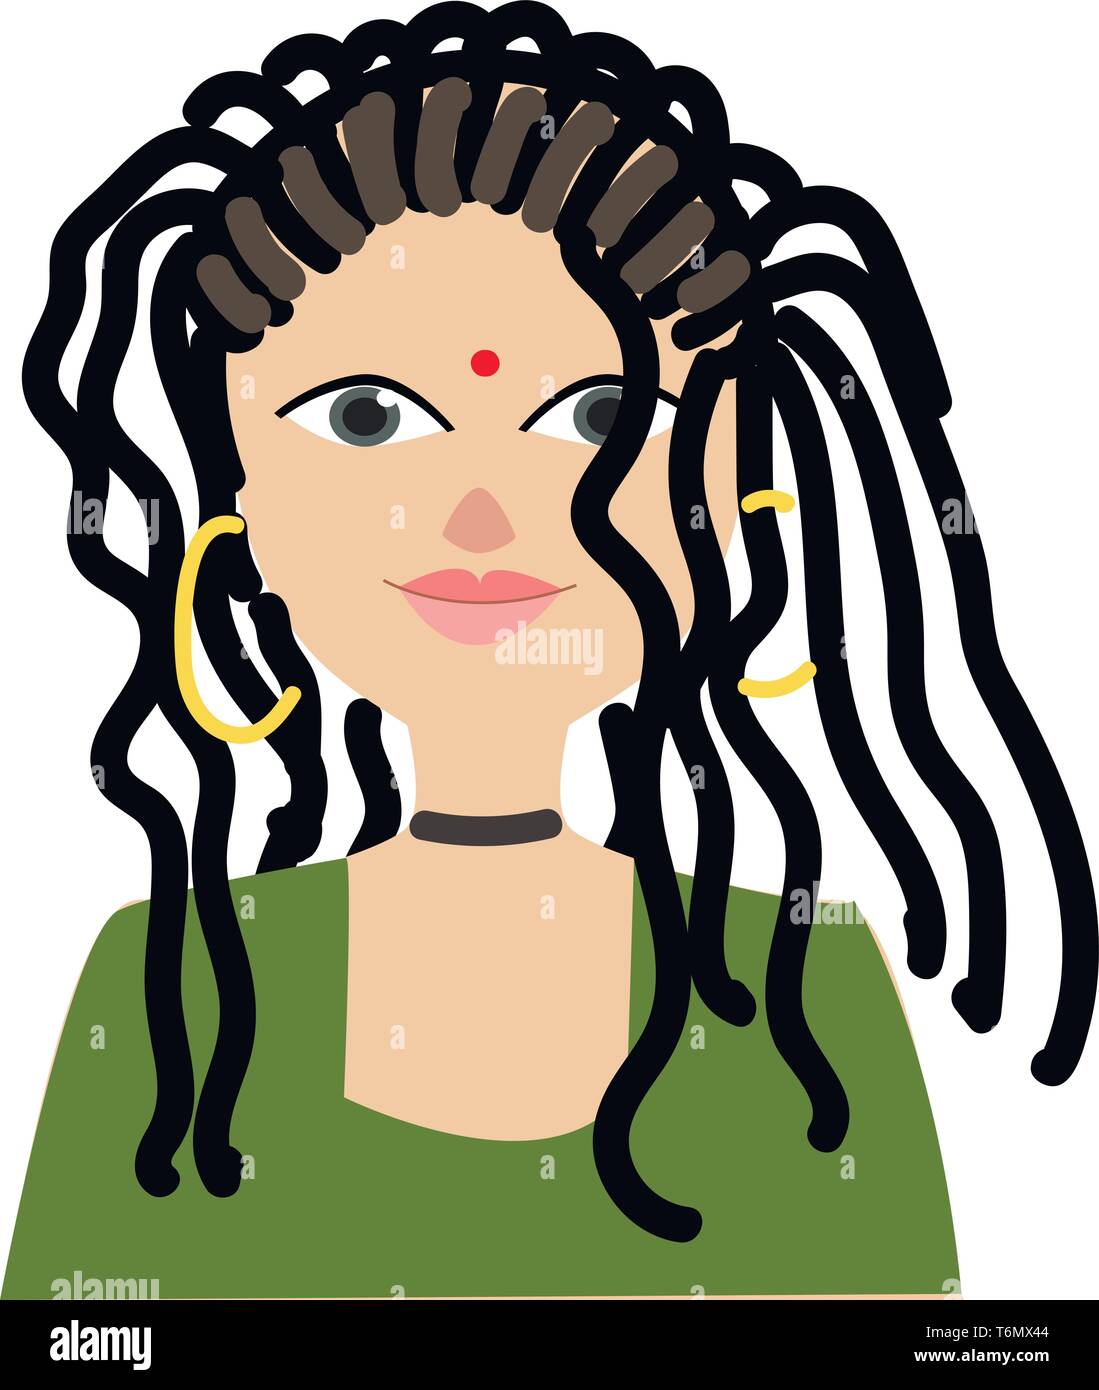 Girl With Dreads Vector Illustration Stock Vector Art